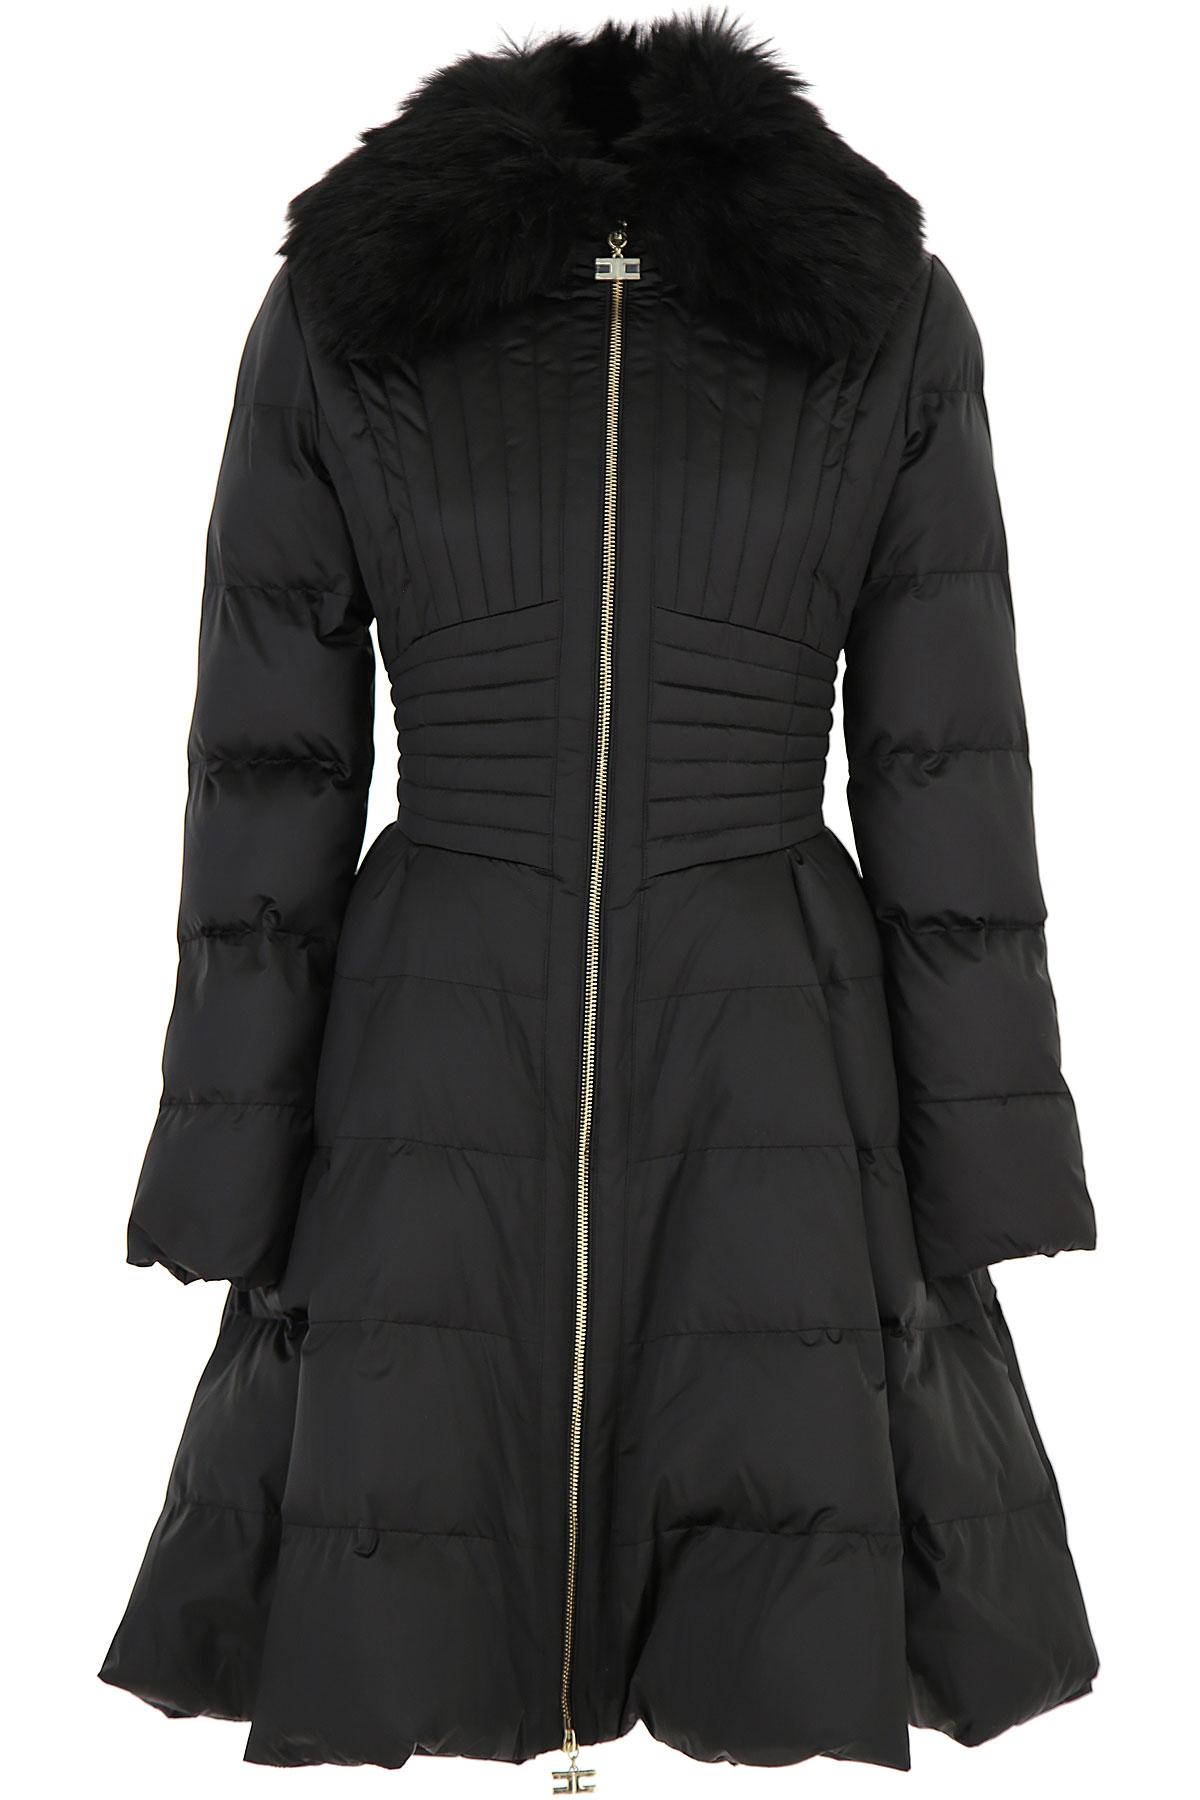 Elisabetta Franchi Fur Down Jacket For Women in Black - Lyst